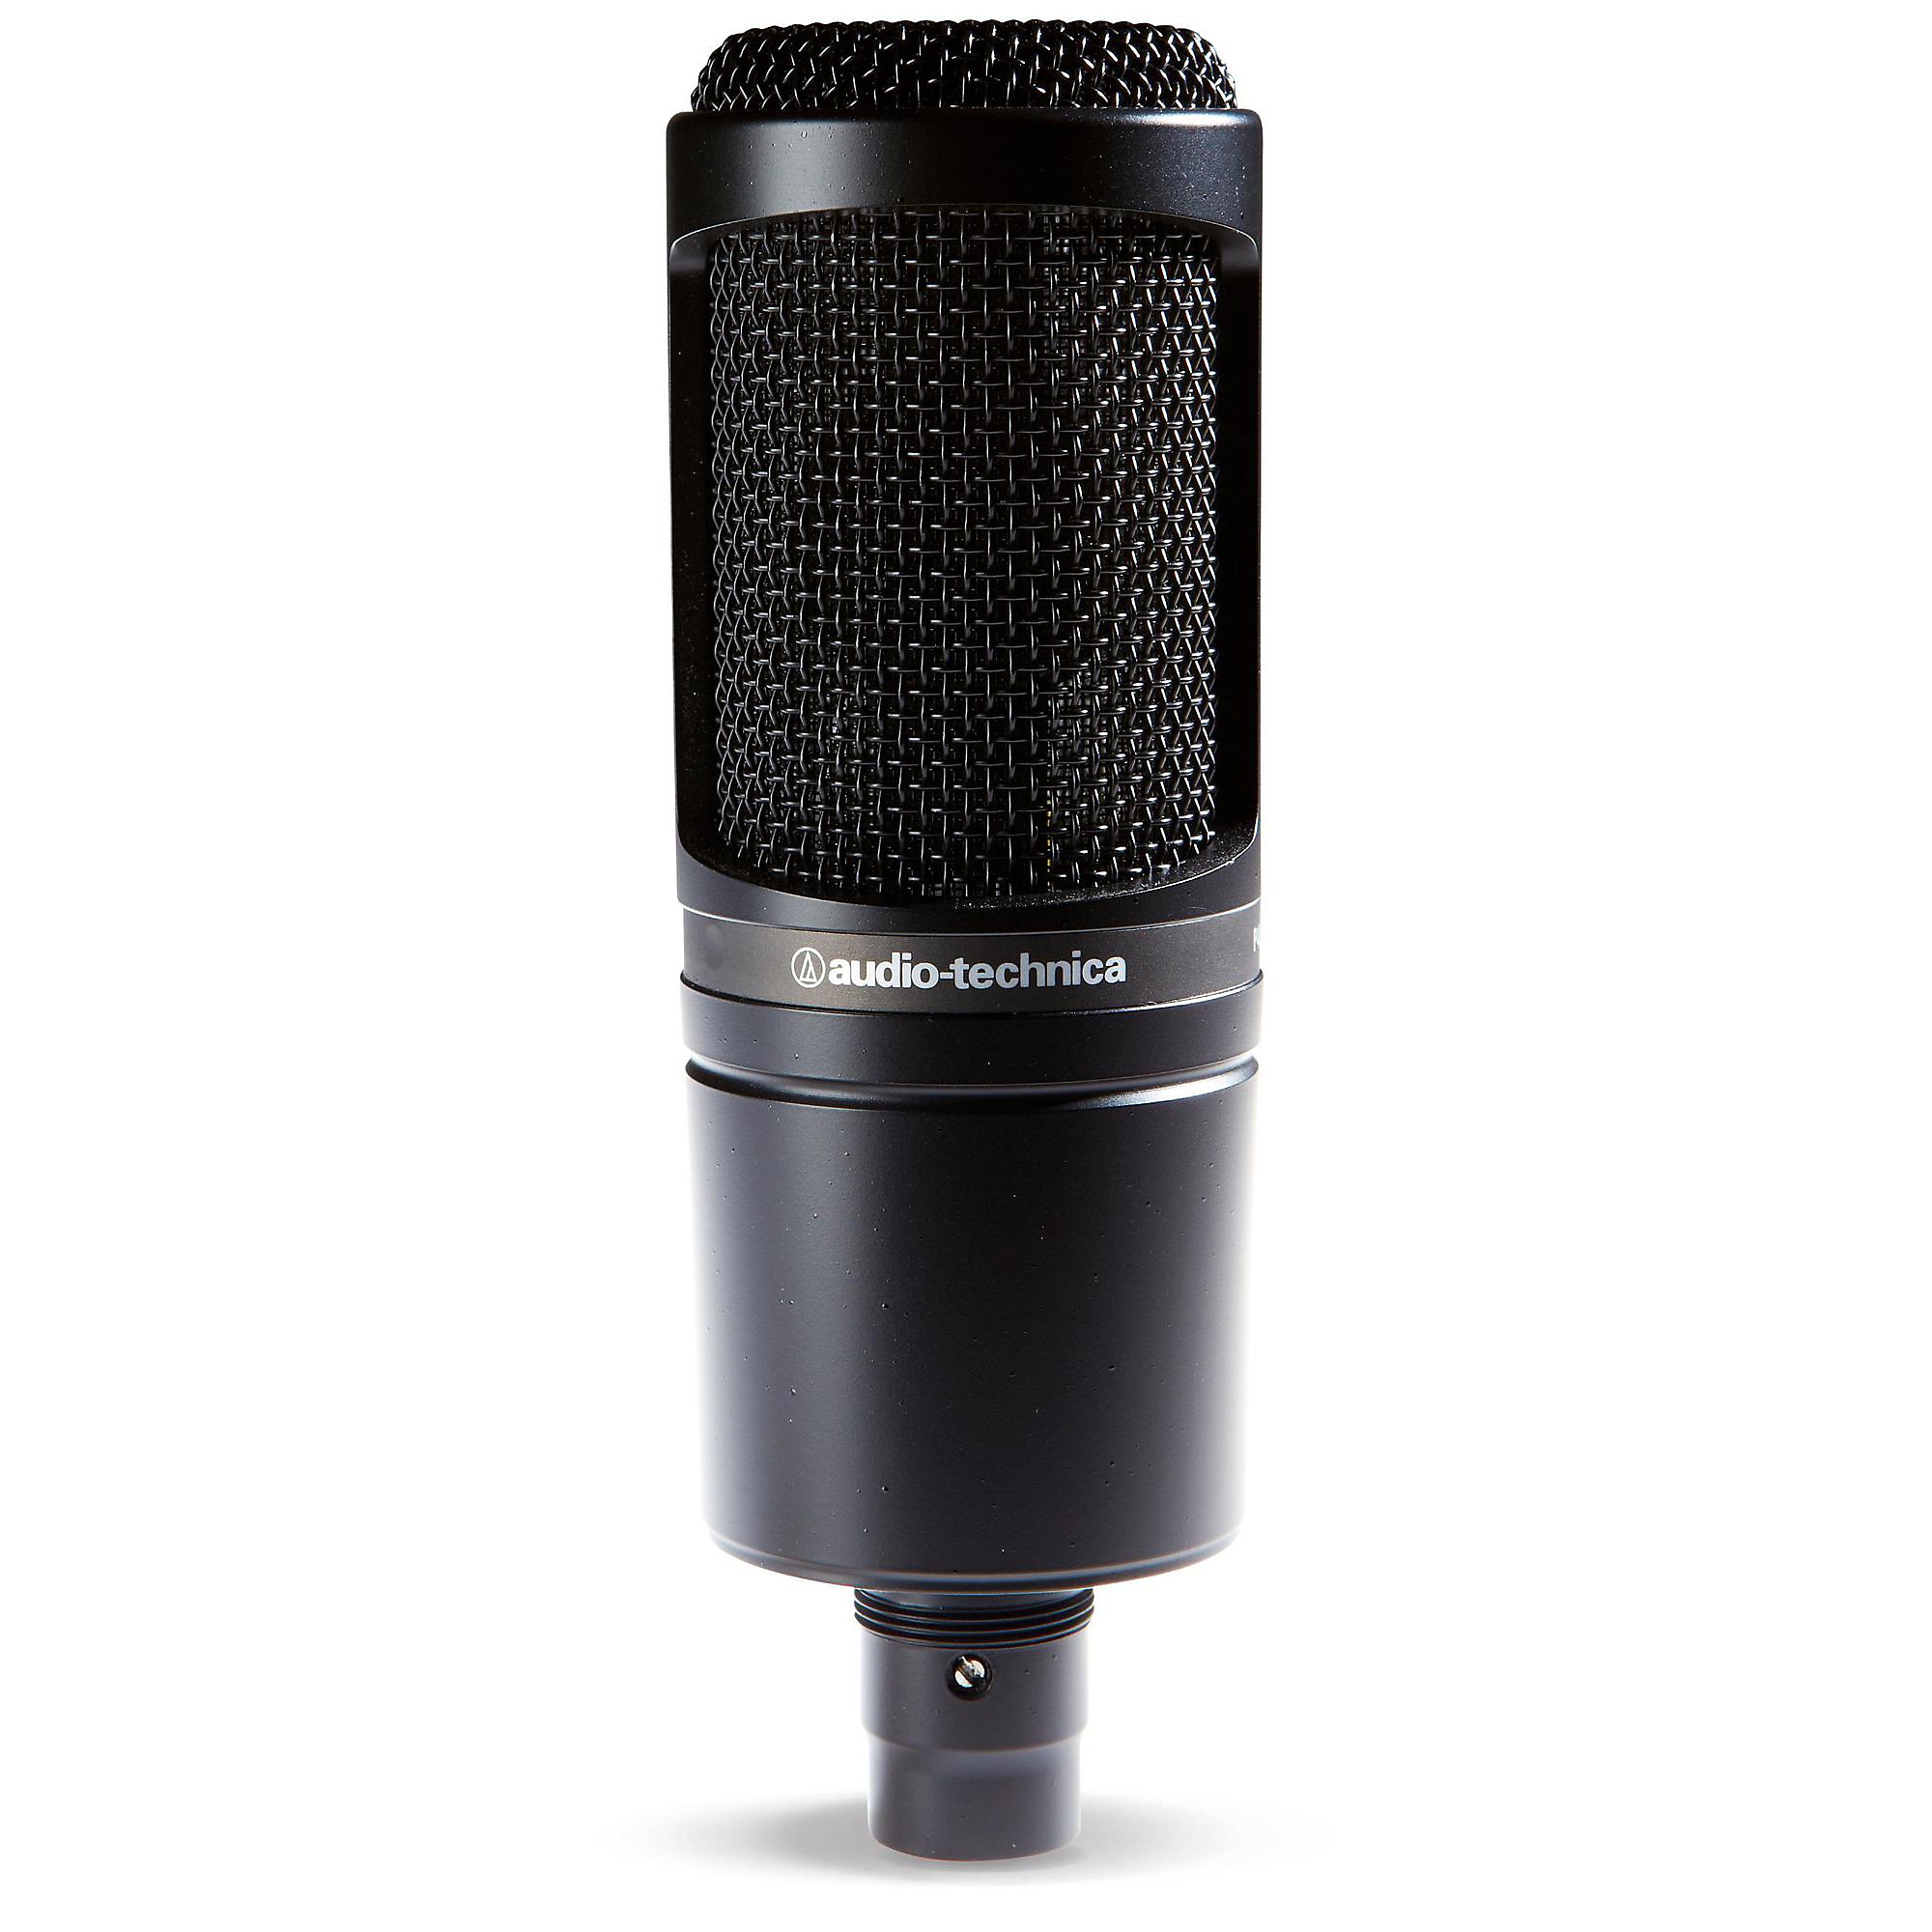 Buy Audio-Technica AT2020 Condenser Microphone